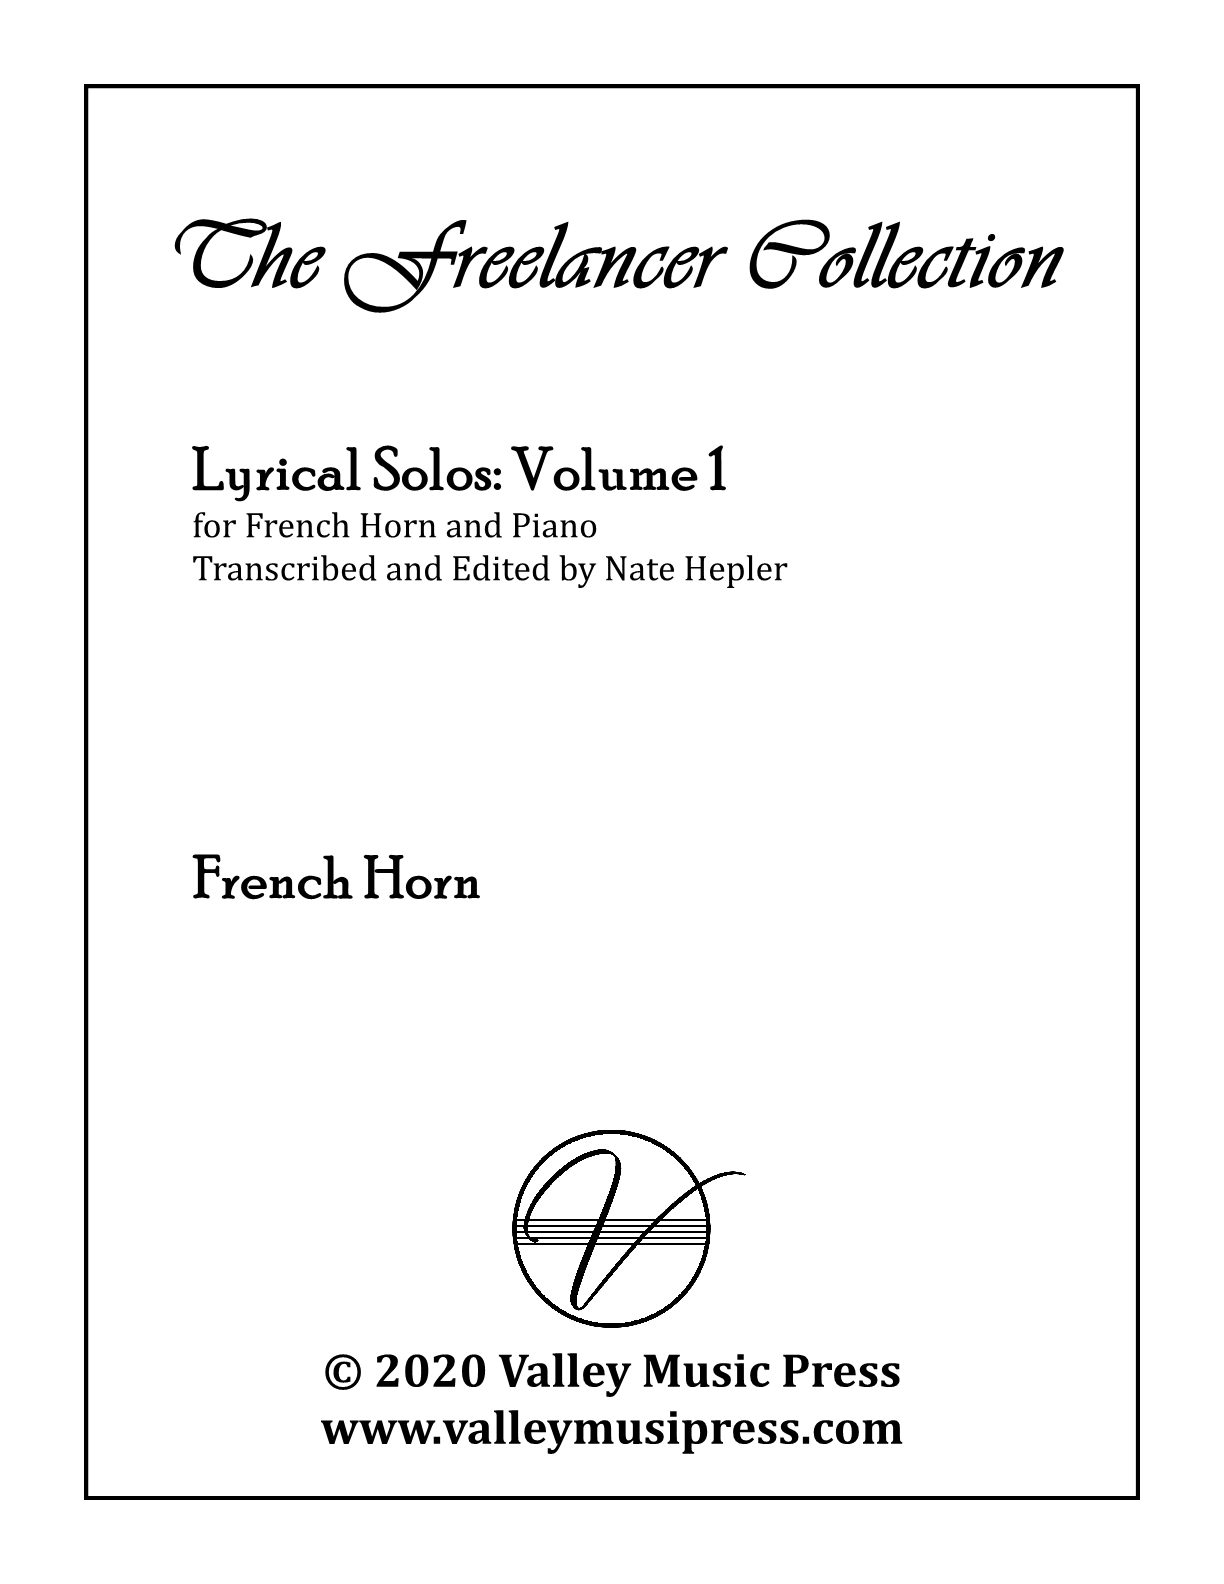 Hepler - Freelancer Collection Lyrical Solos Vol 1 (Hrn & Piano)